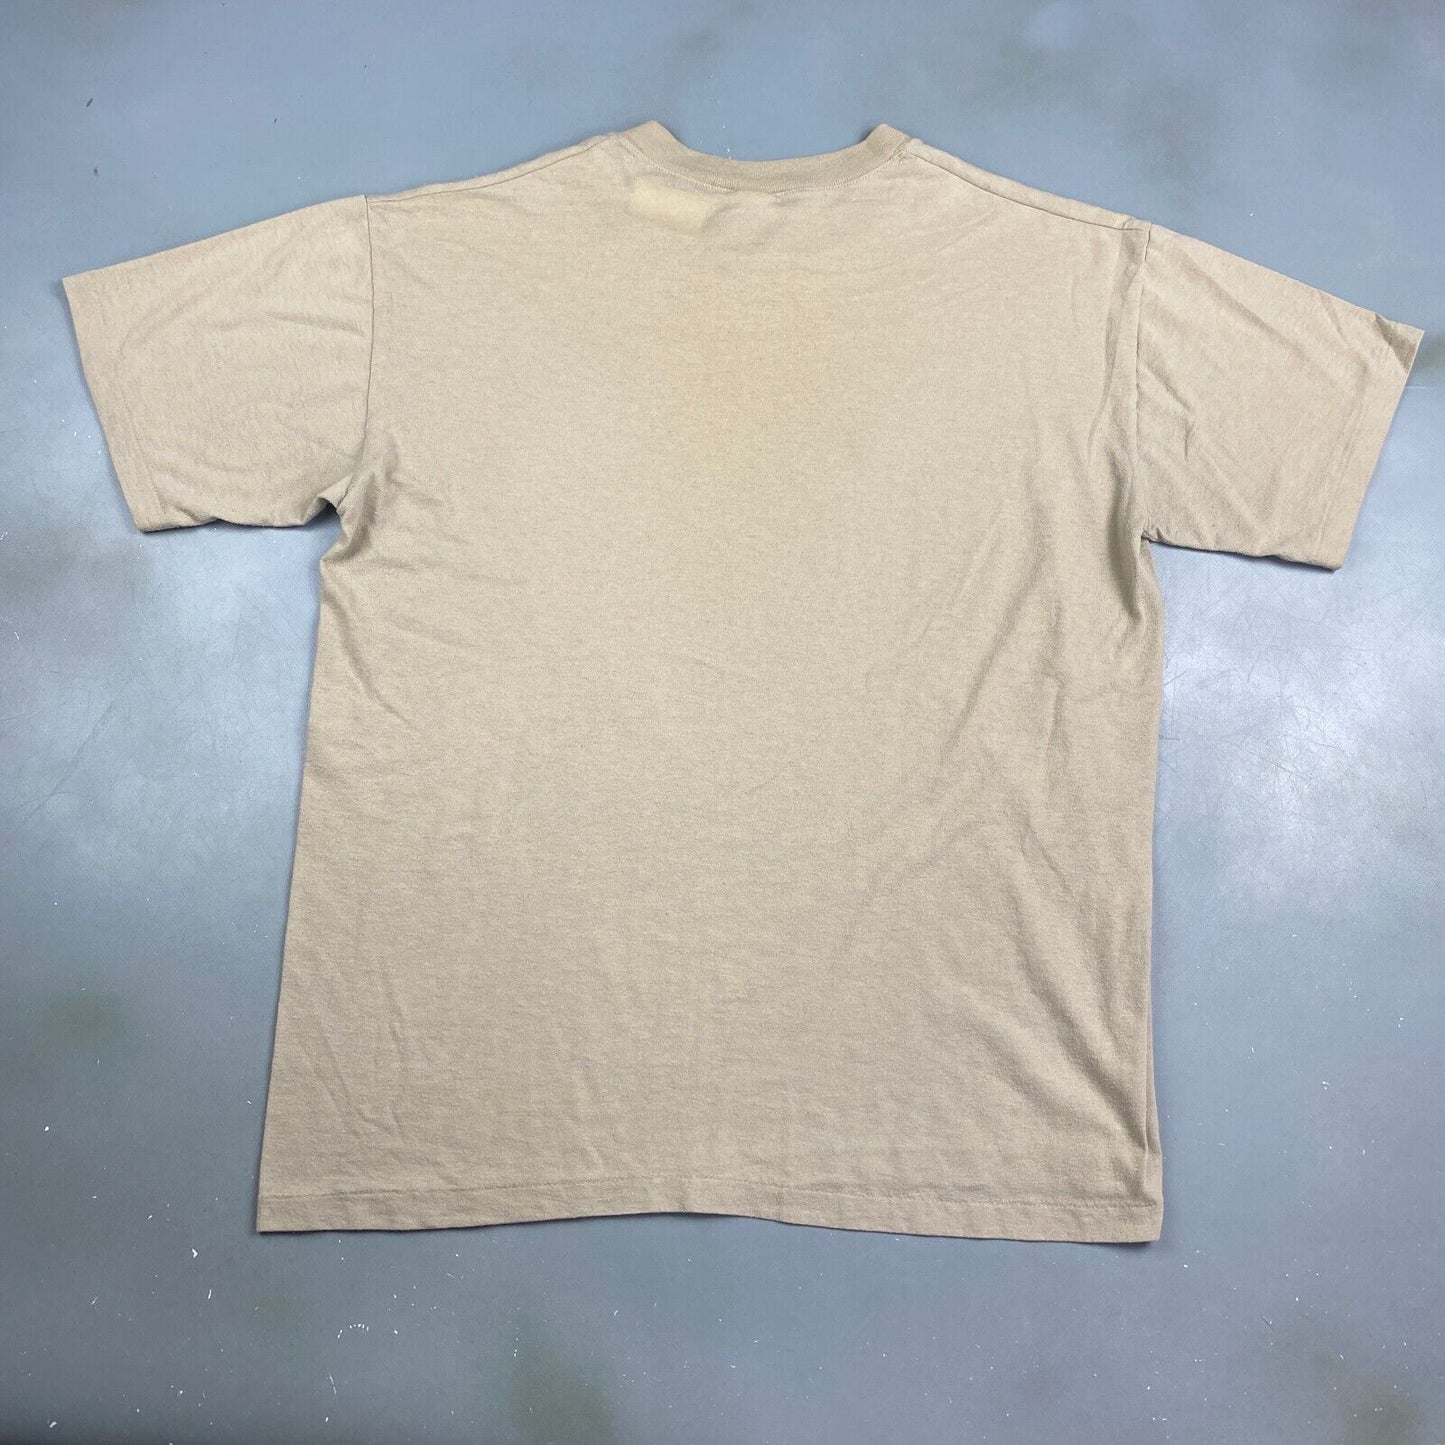 VINTAGE 90s Duke Blank Tan T-Shirt sz Large Adult MadeinUSA